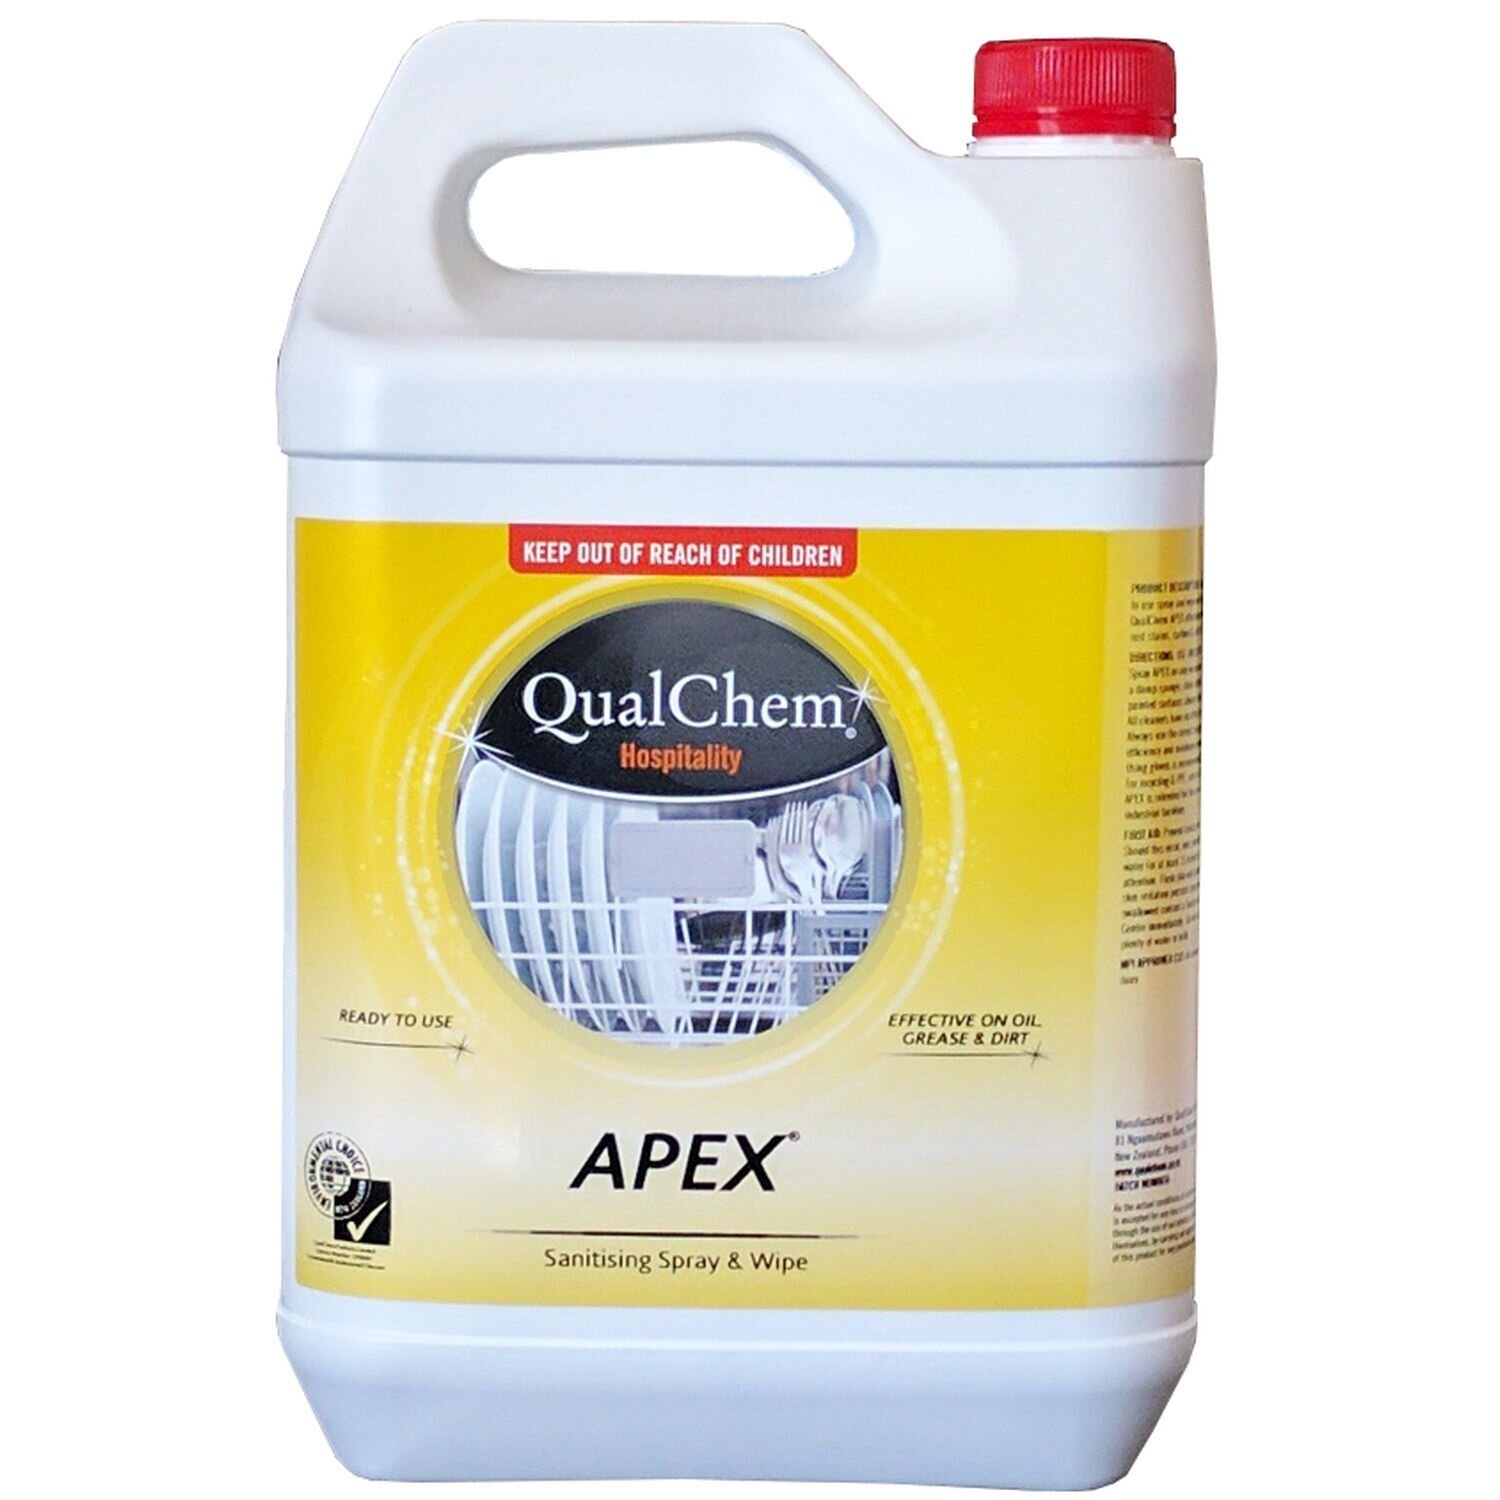 Apex Sanitising Spray & Wipe Cleaner